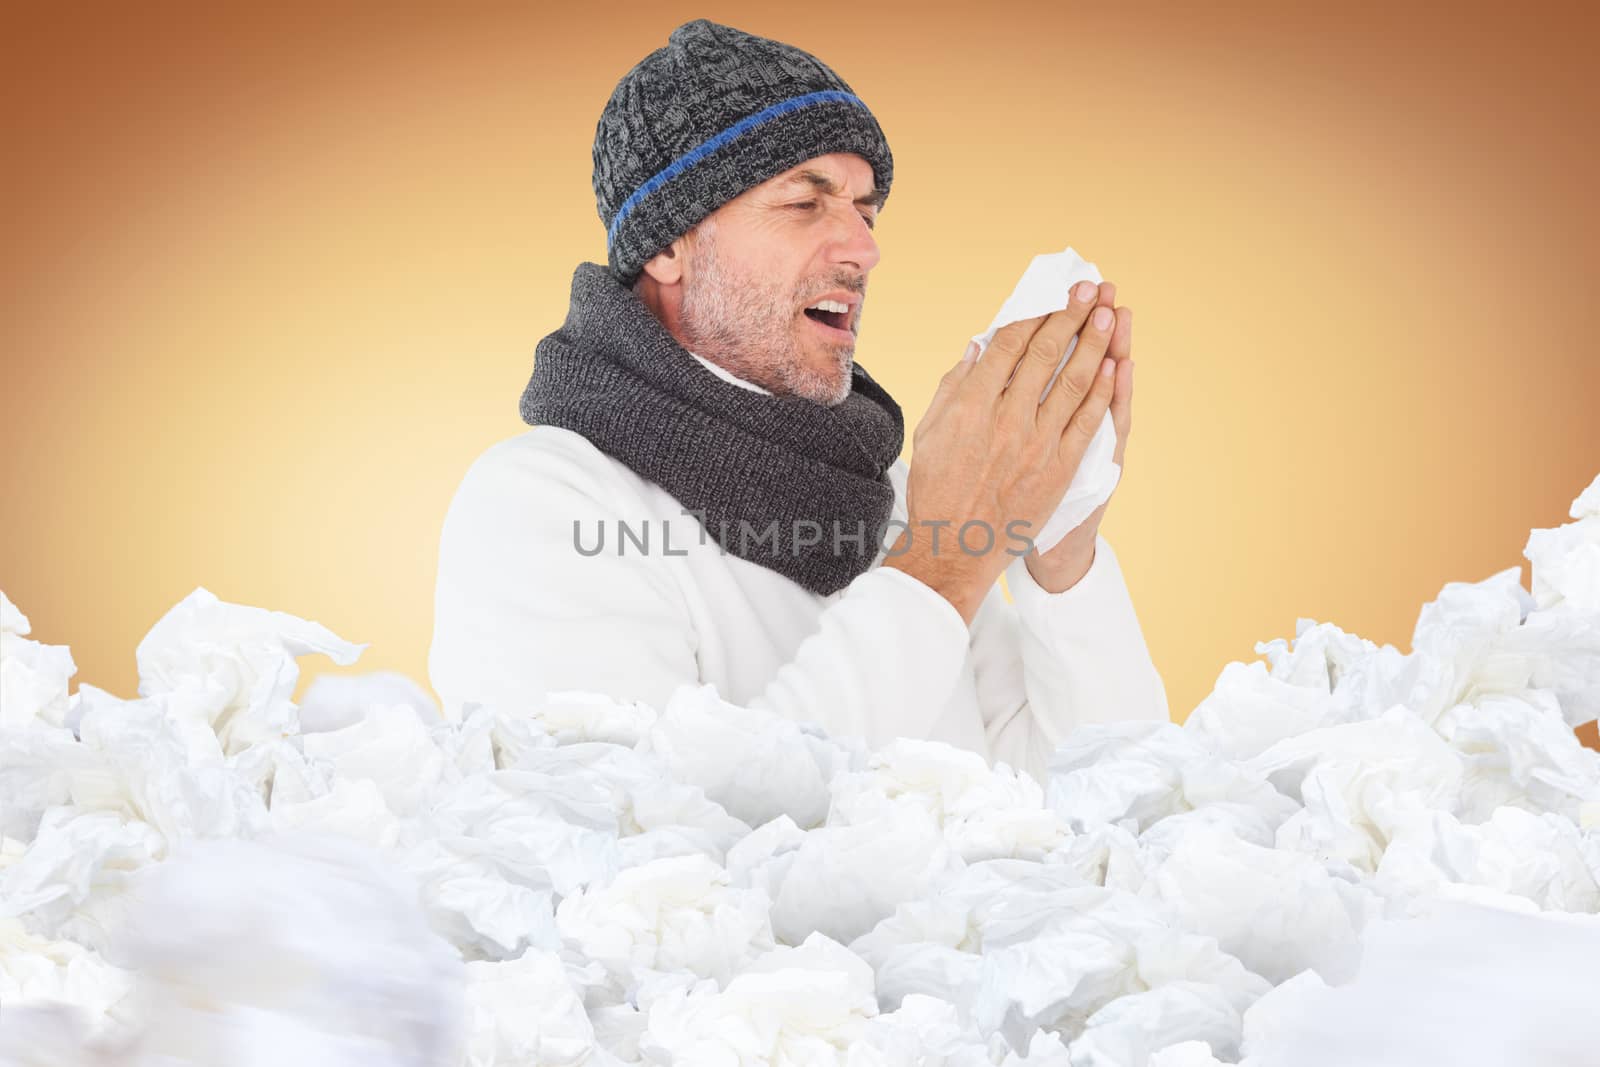 Sick man in winter fashion sneezing against orange vignette